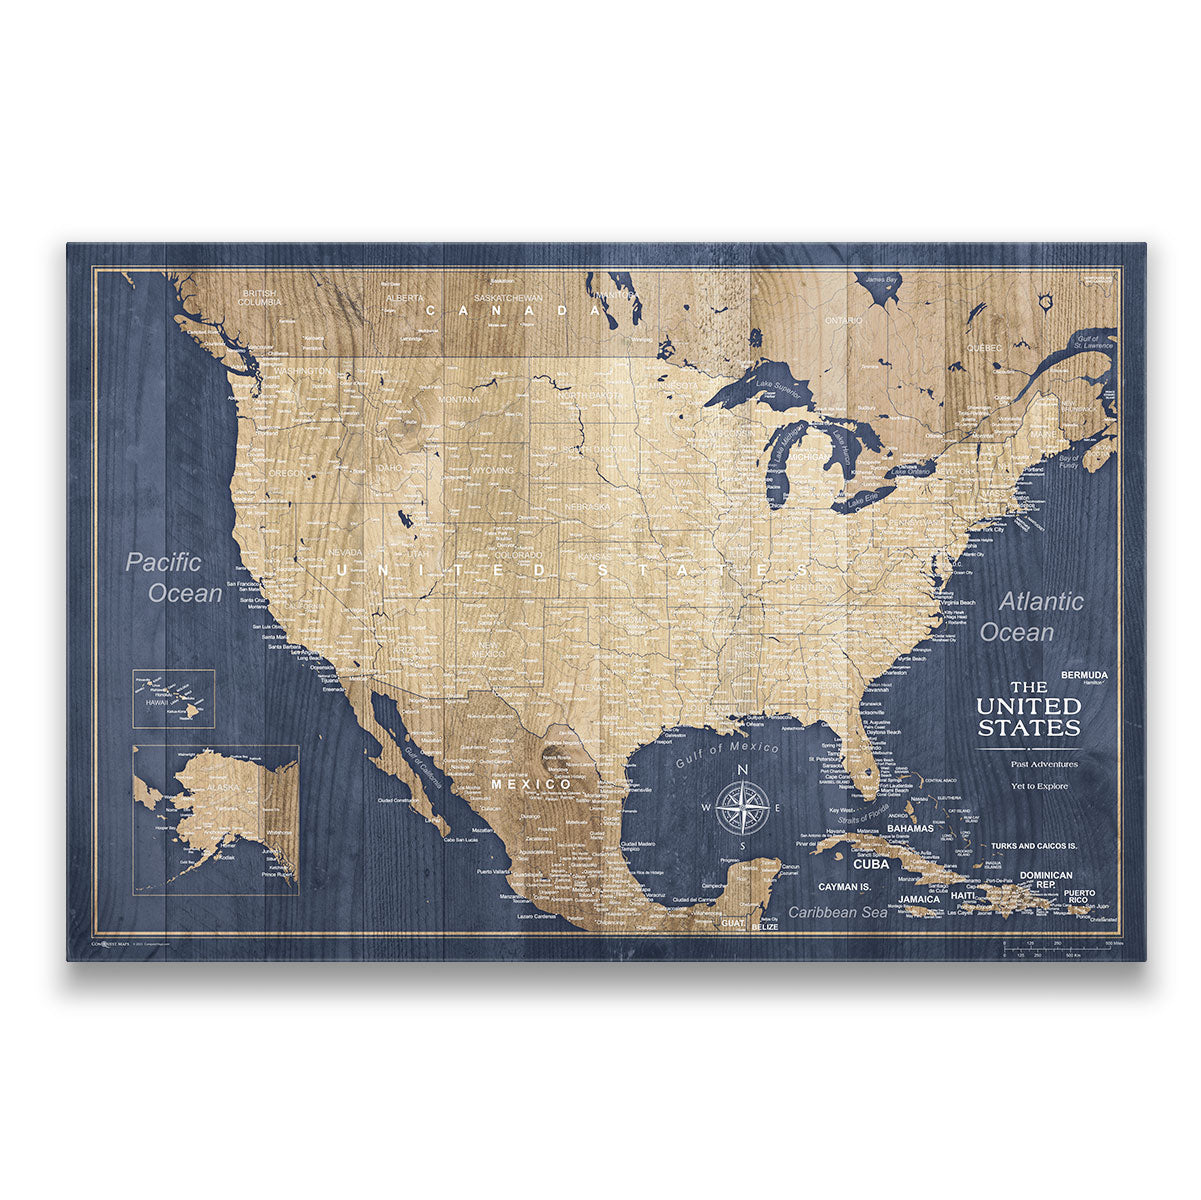 All Unites States Poster Maps